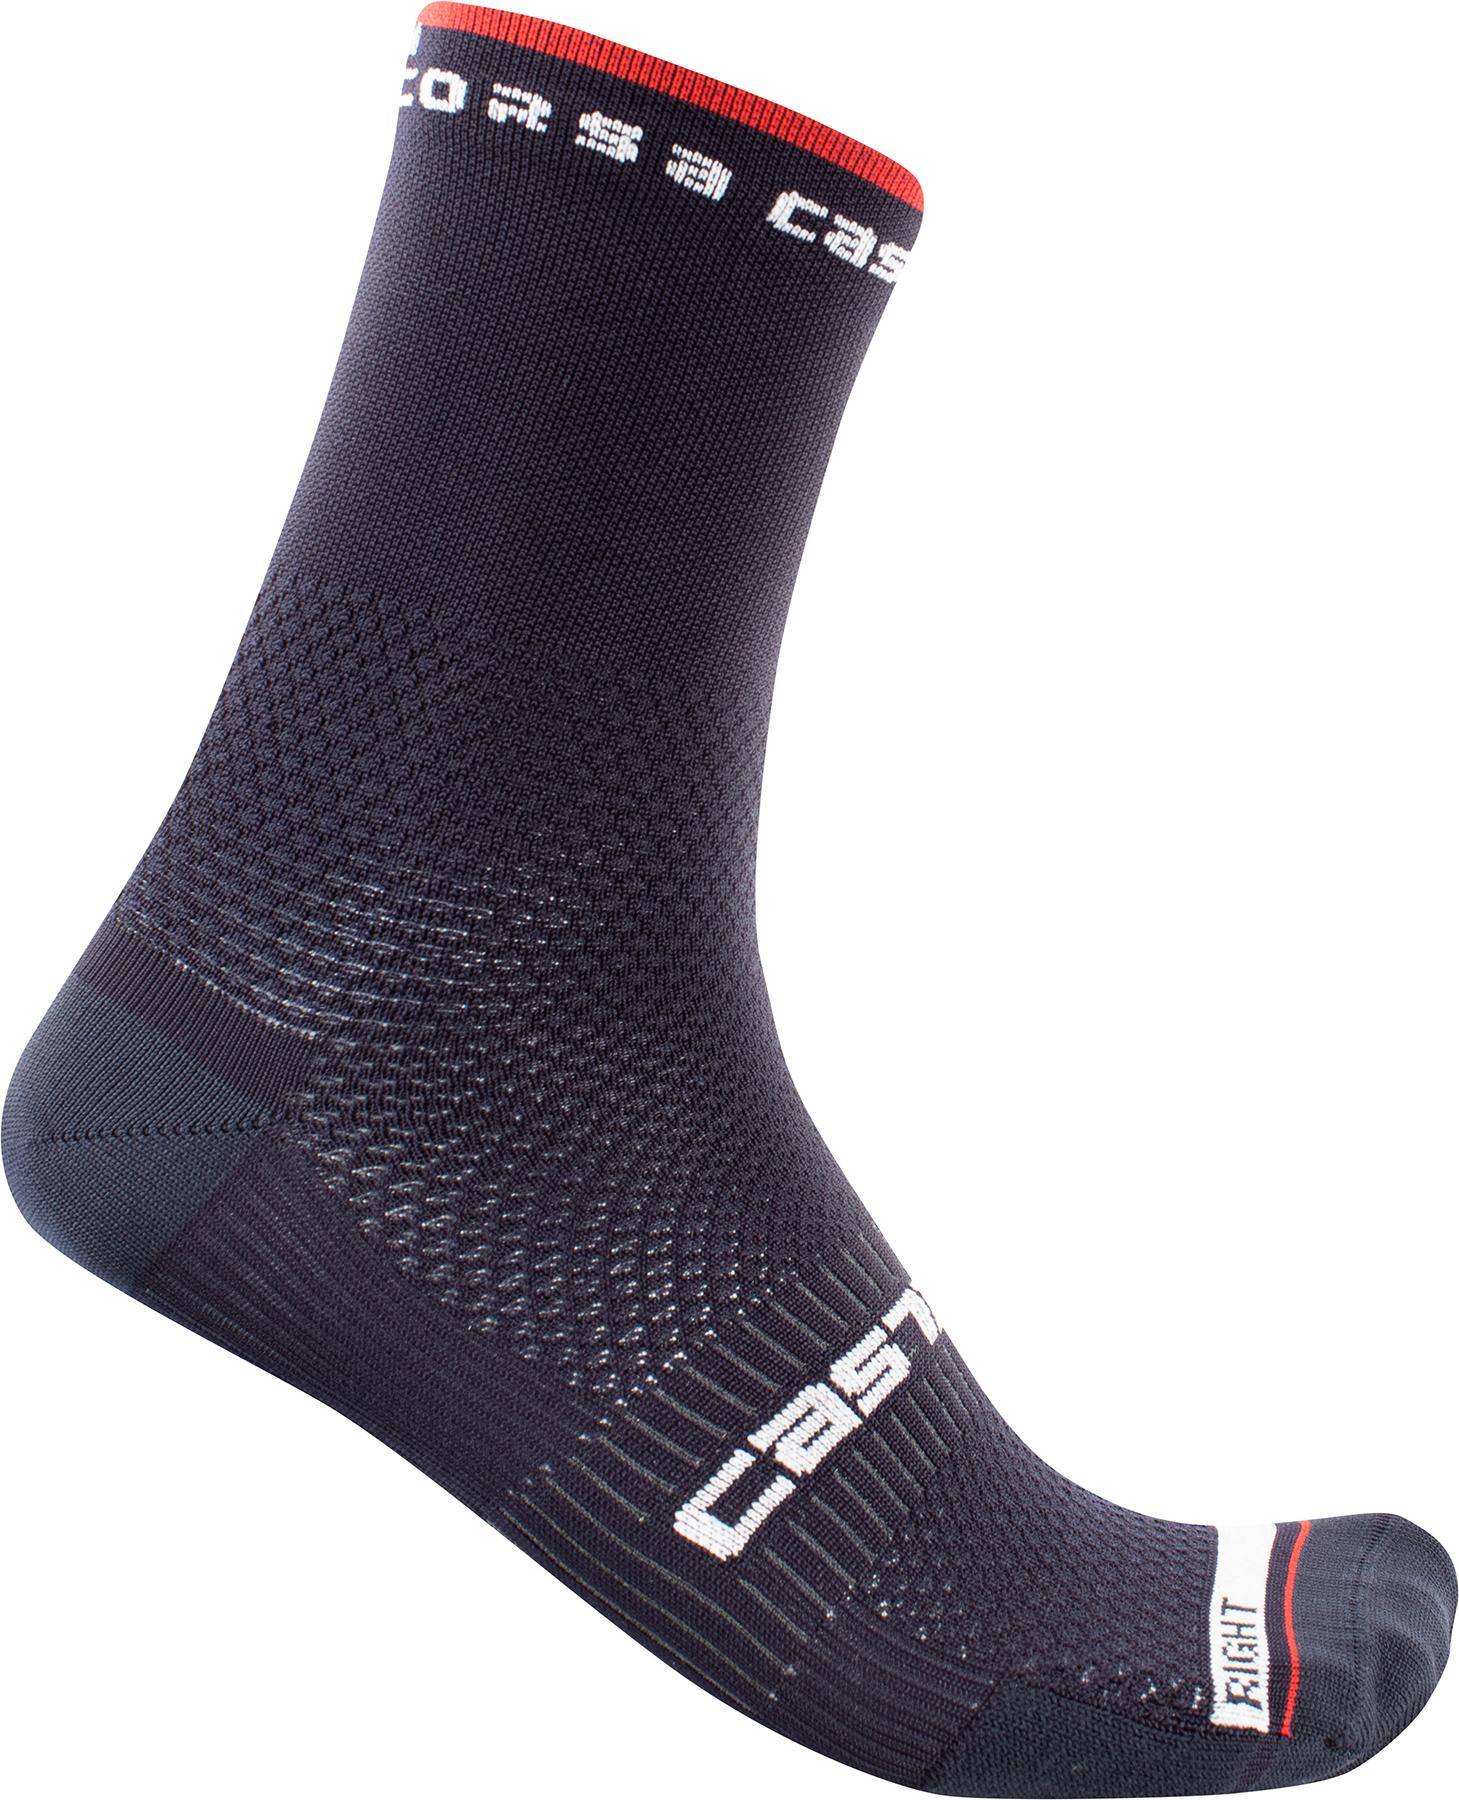 Castelli Rosso Corsa Pro 15 Cycling Socks - Savile Blue